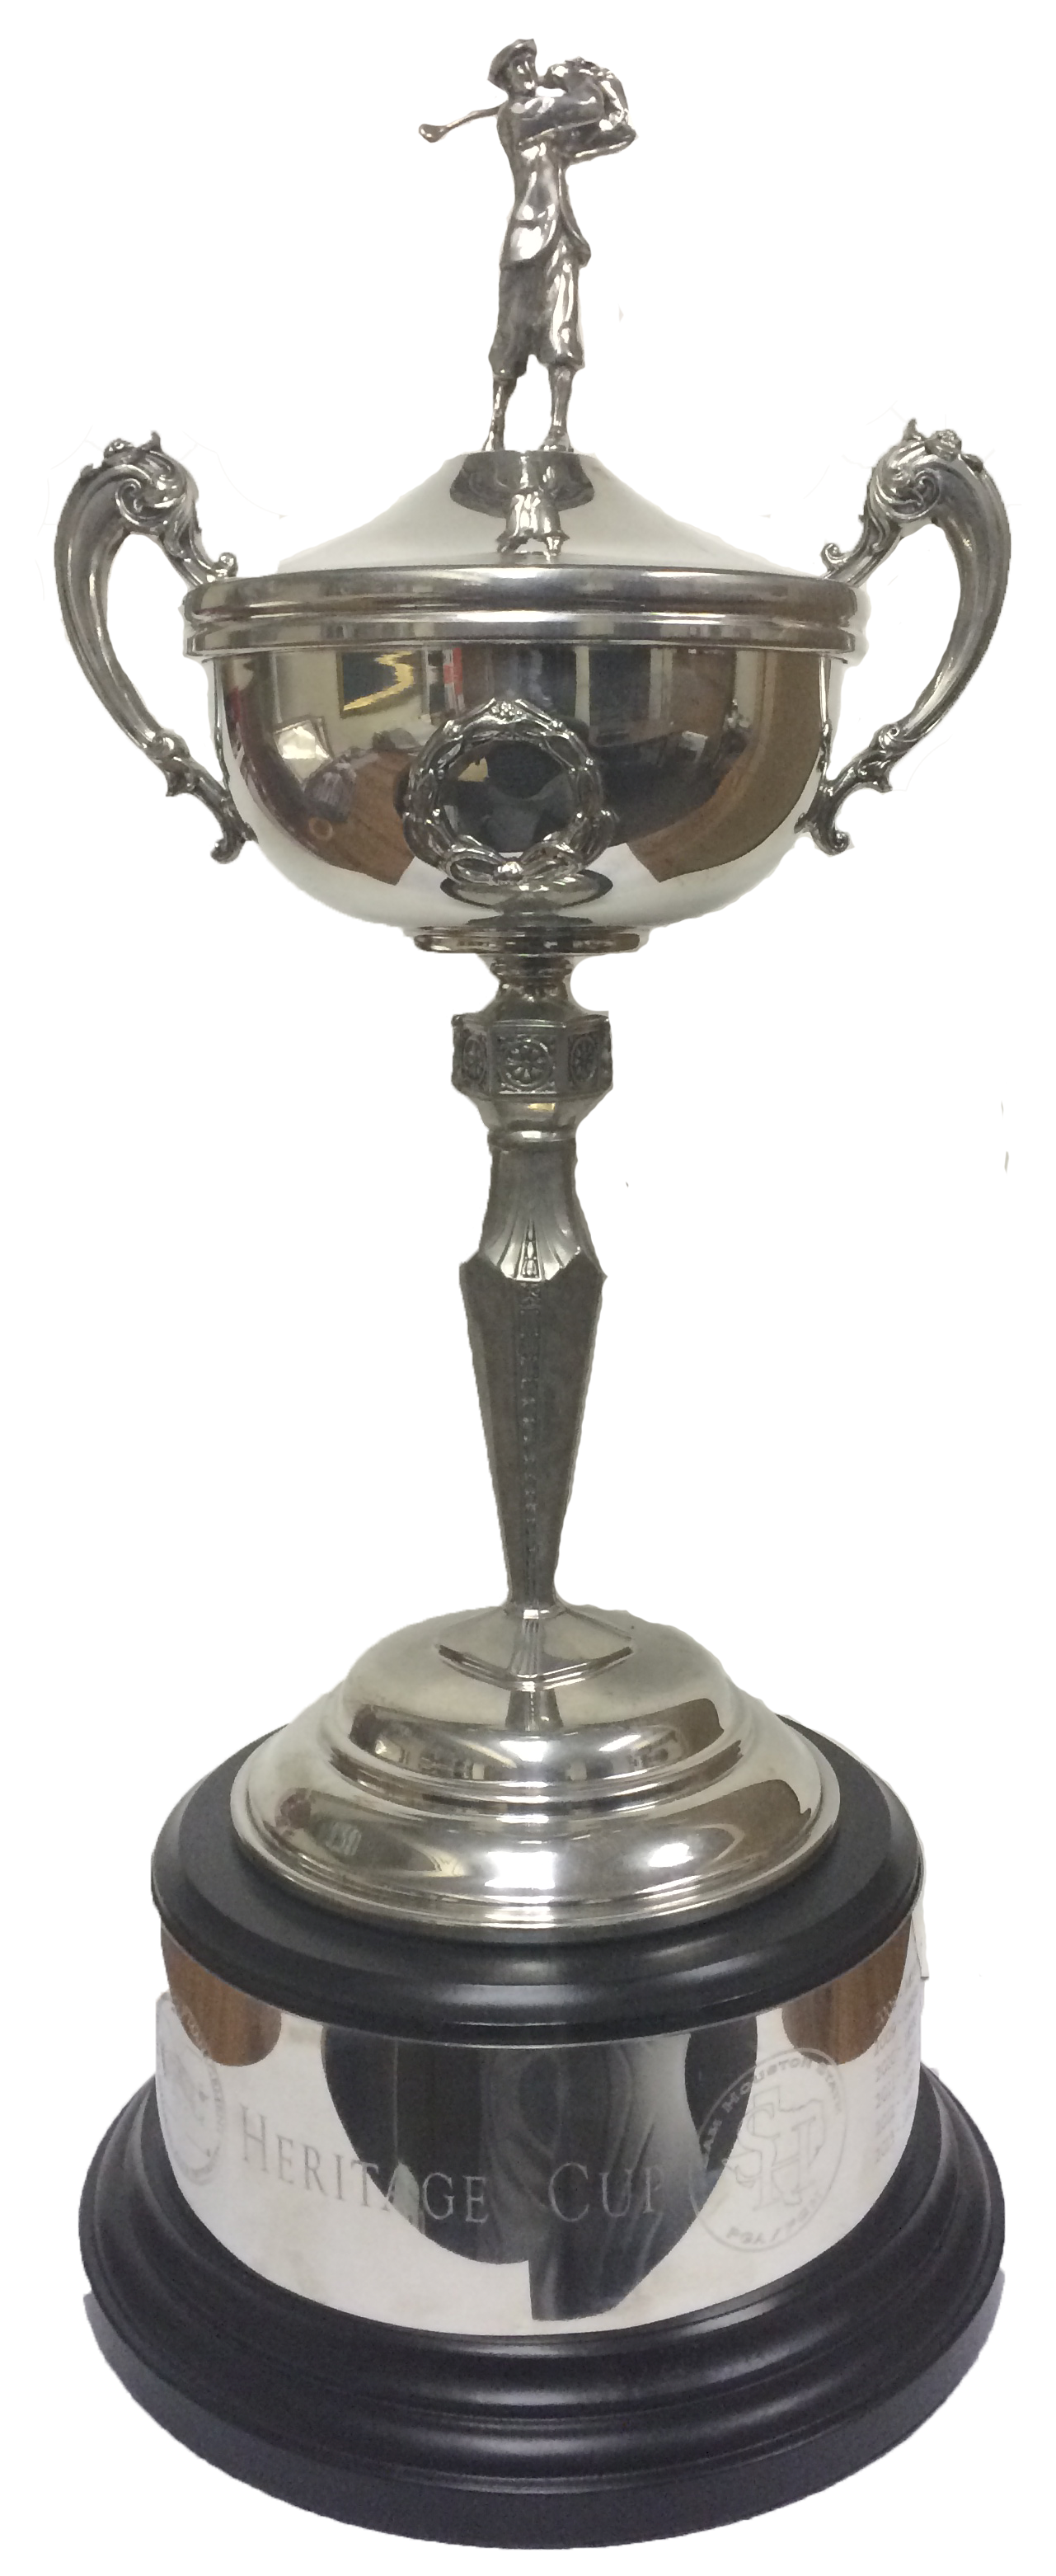 Heritage Cup Trophy